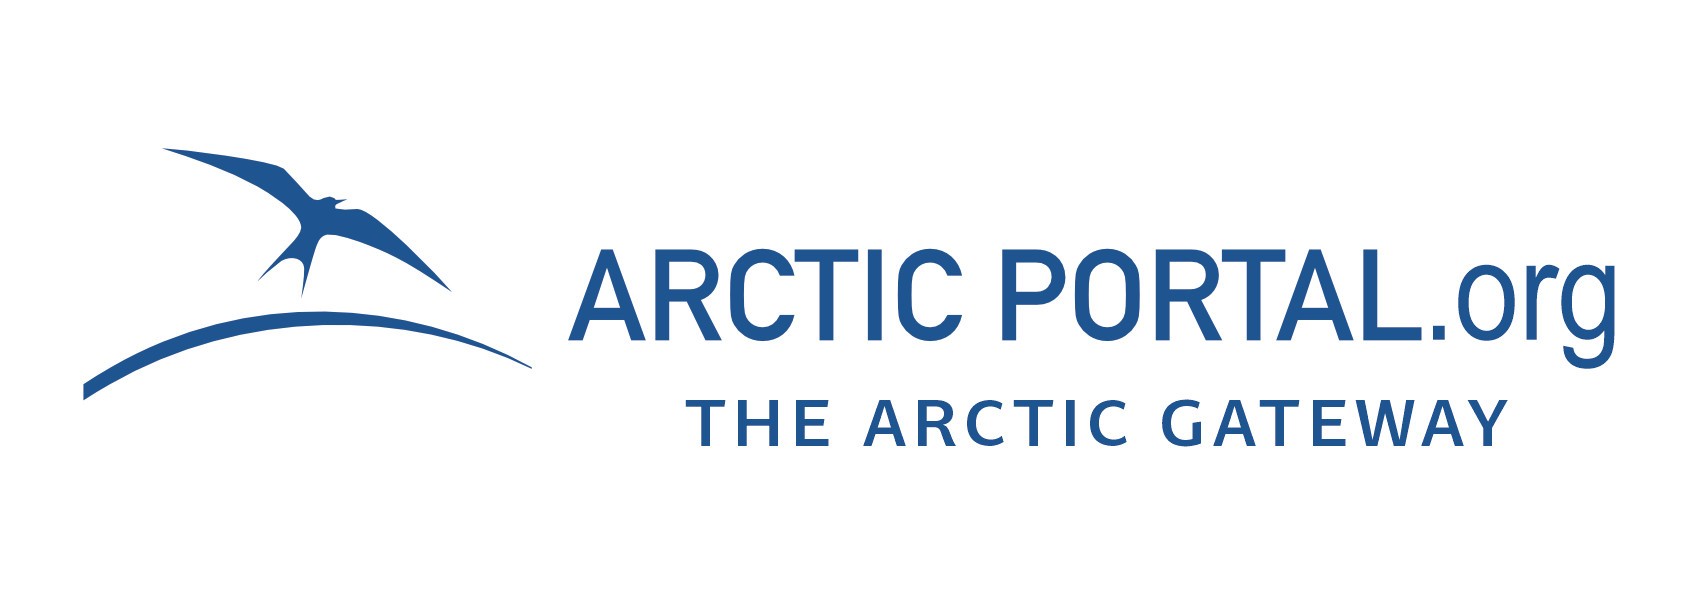 Arctic Portal white